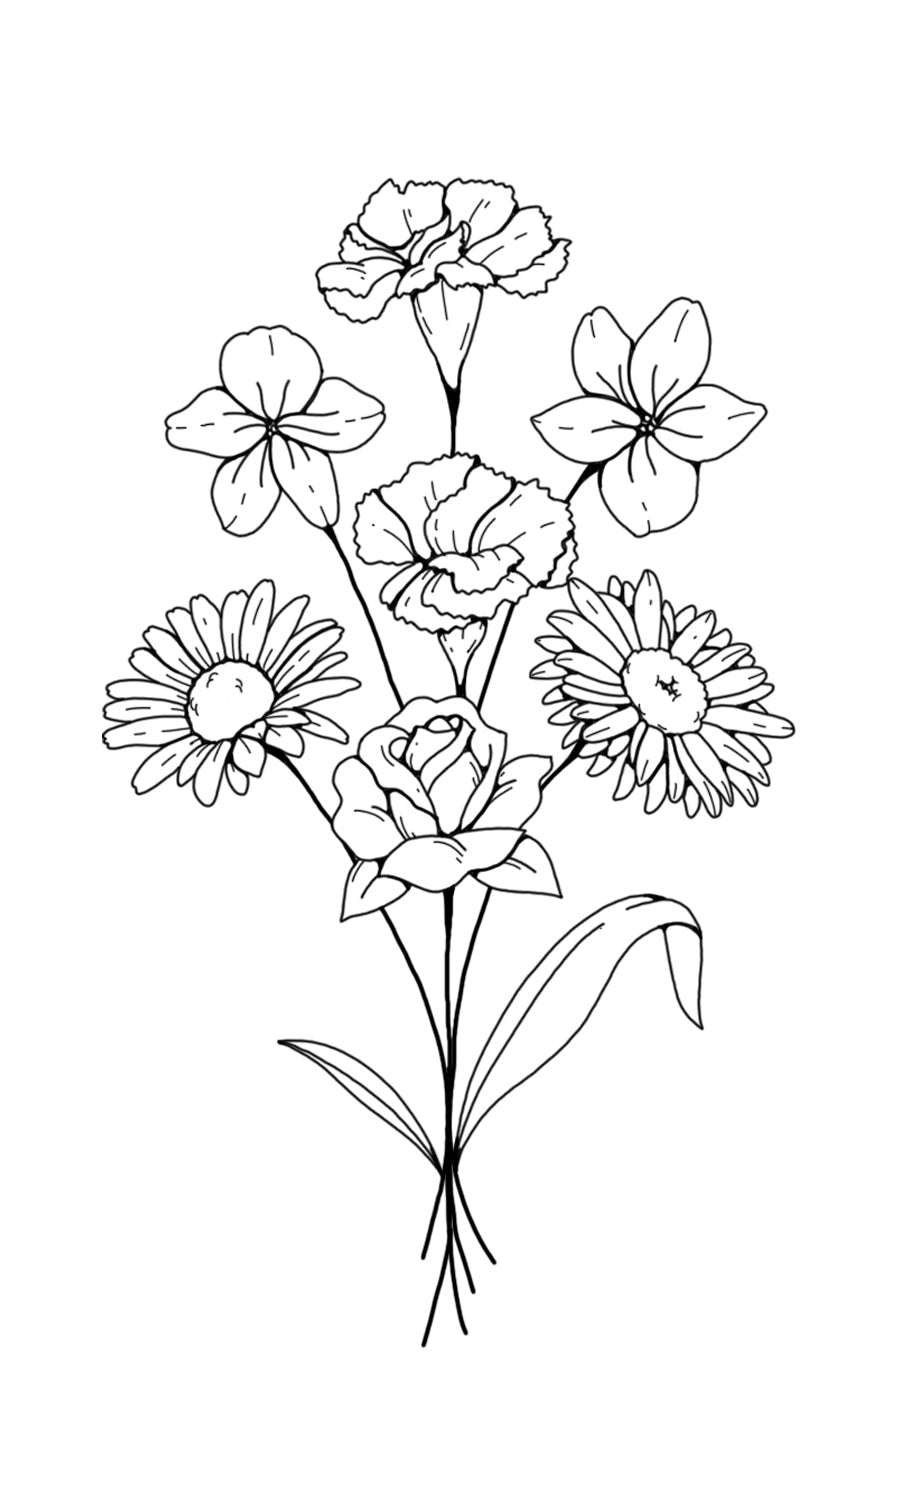 LIST Best Birth Flower Tattoo Ideas To Try